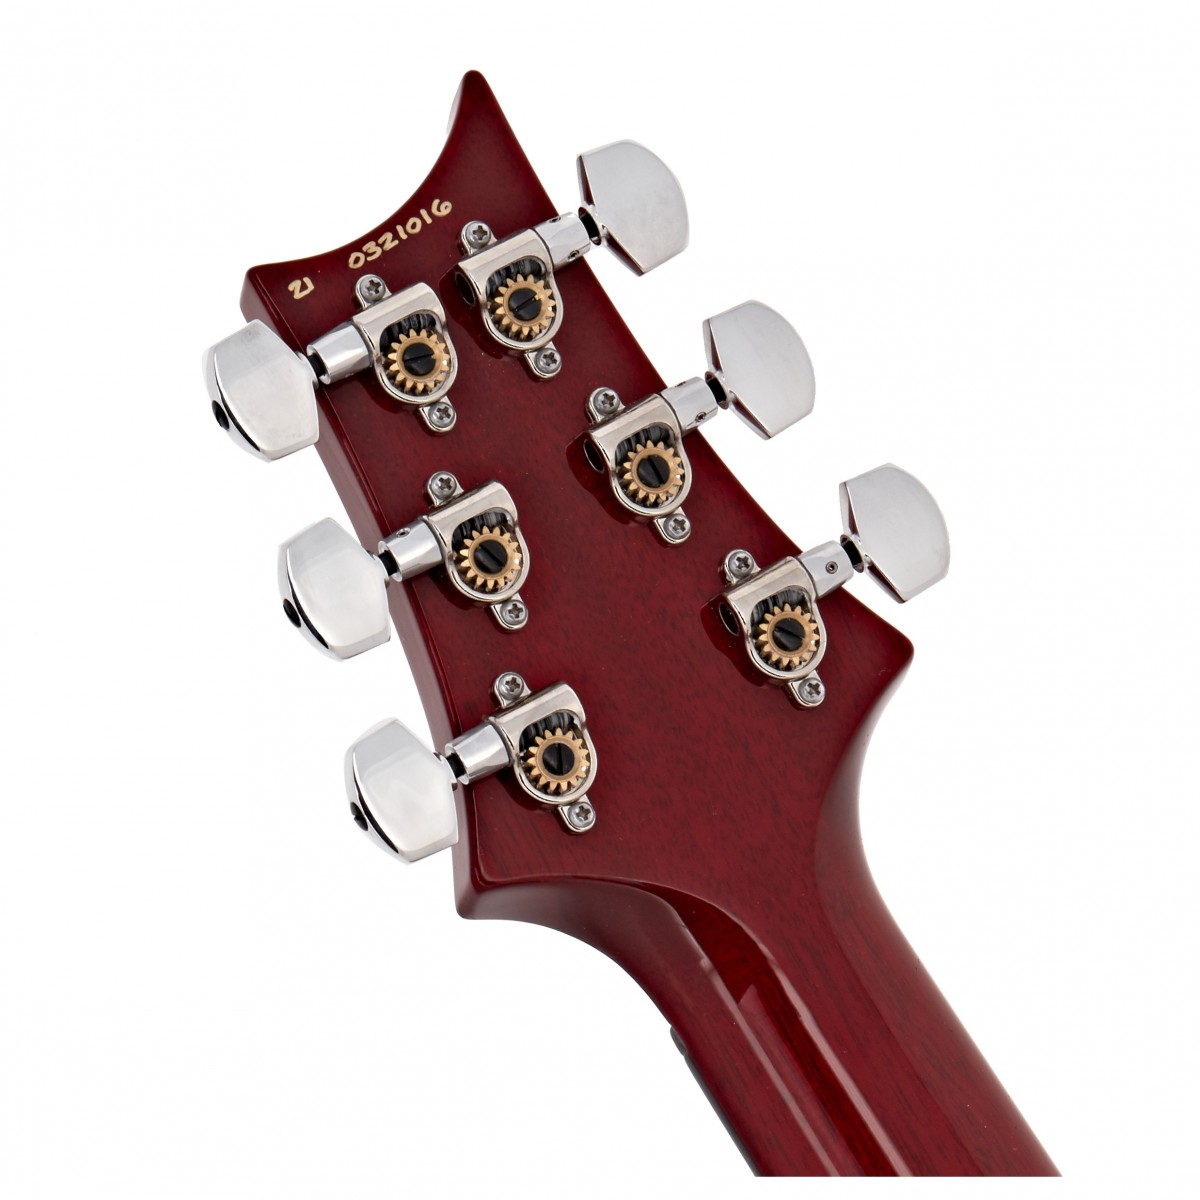 Prs Custom 24 Usa 2h Trem Rw - Charcoal Cherry Burst - Guitarra eléctrica de doble corte - Variation 7